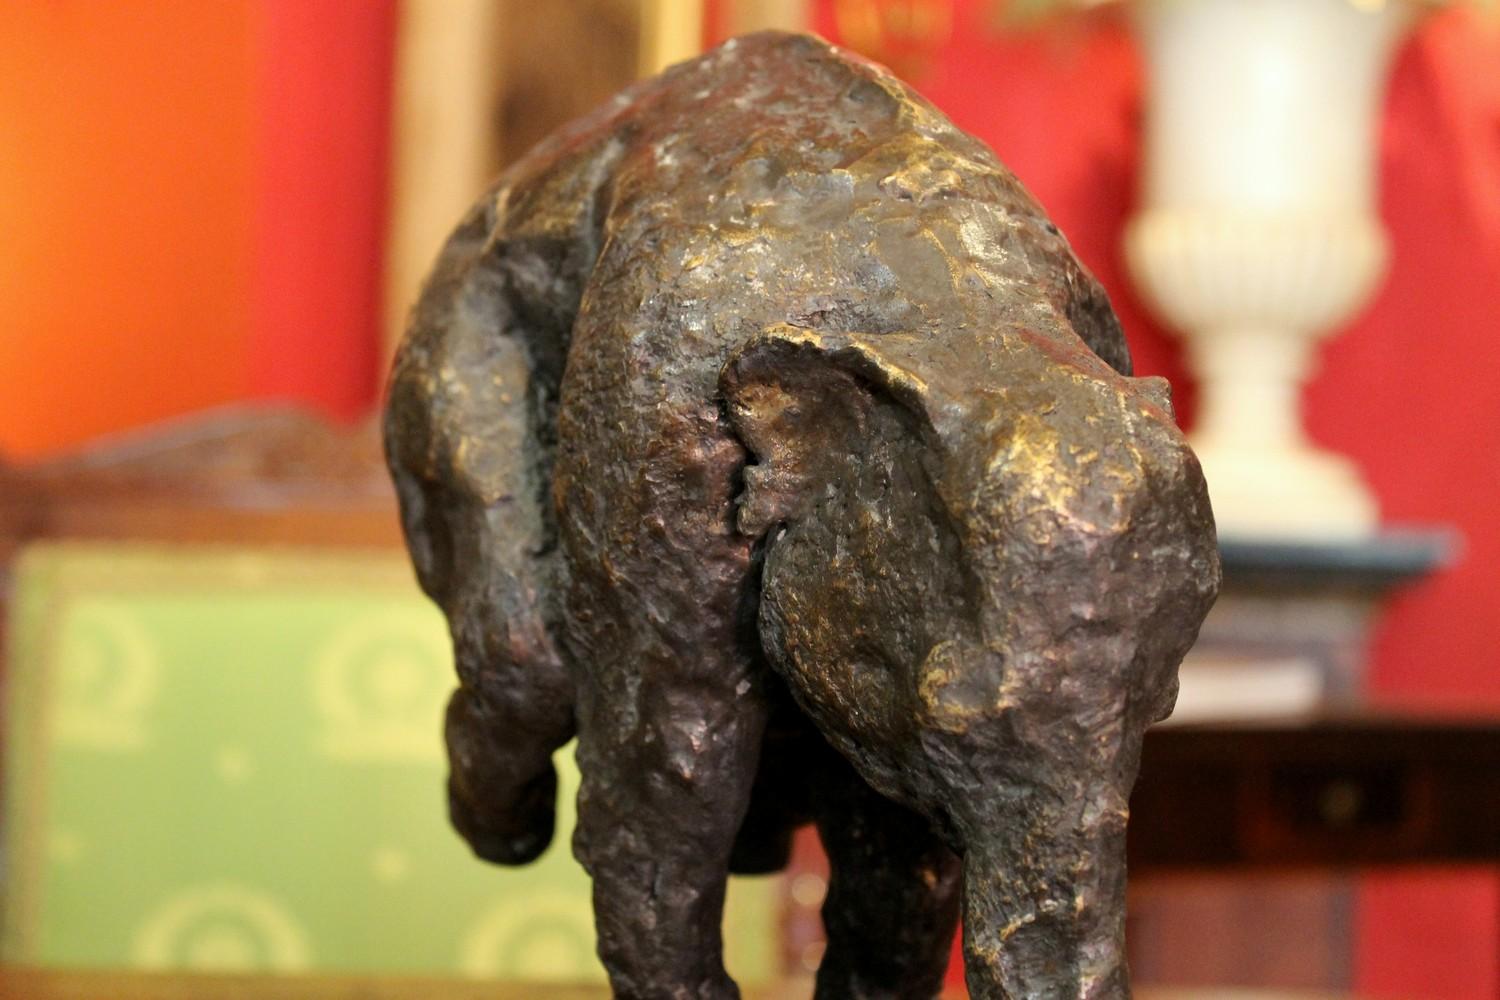 Elephant on Iron Pedestal, Lost Wax Casting Parcel-Gilt Patina Bronze Sculpture For Sale 8